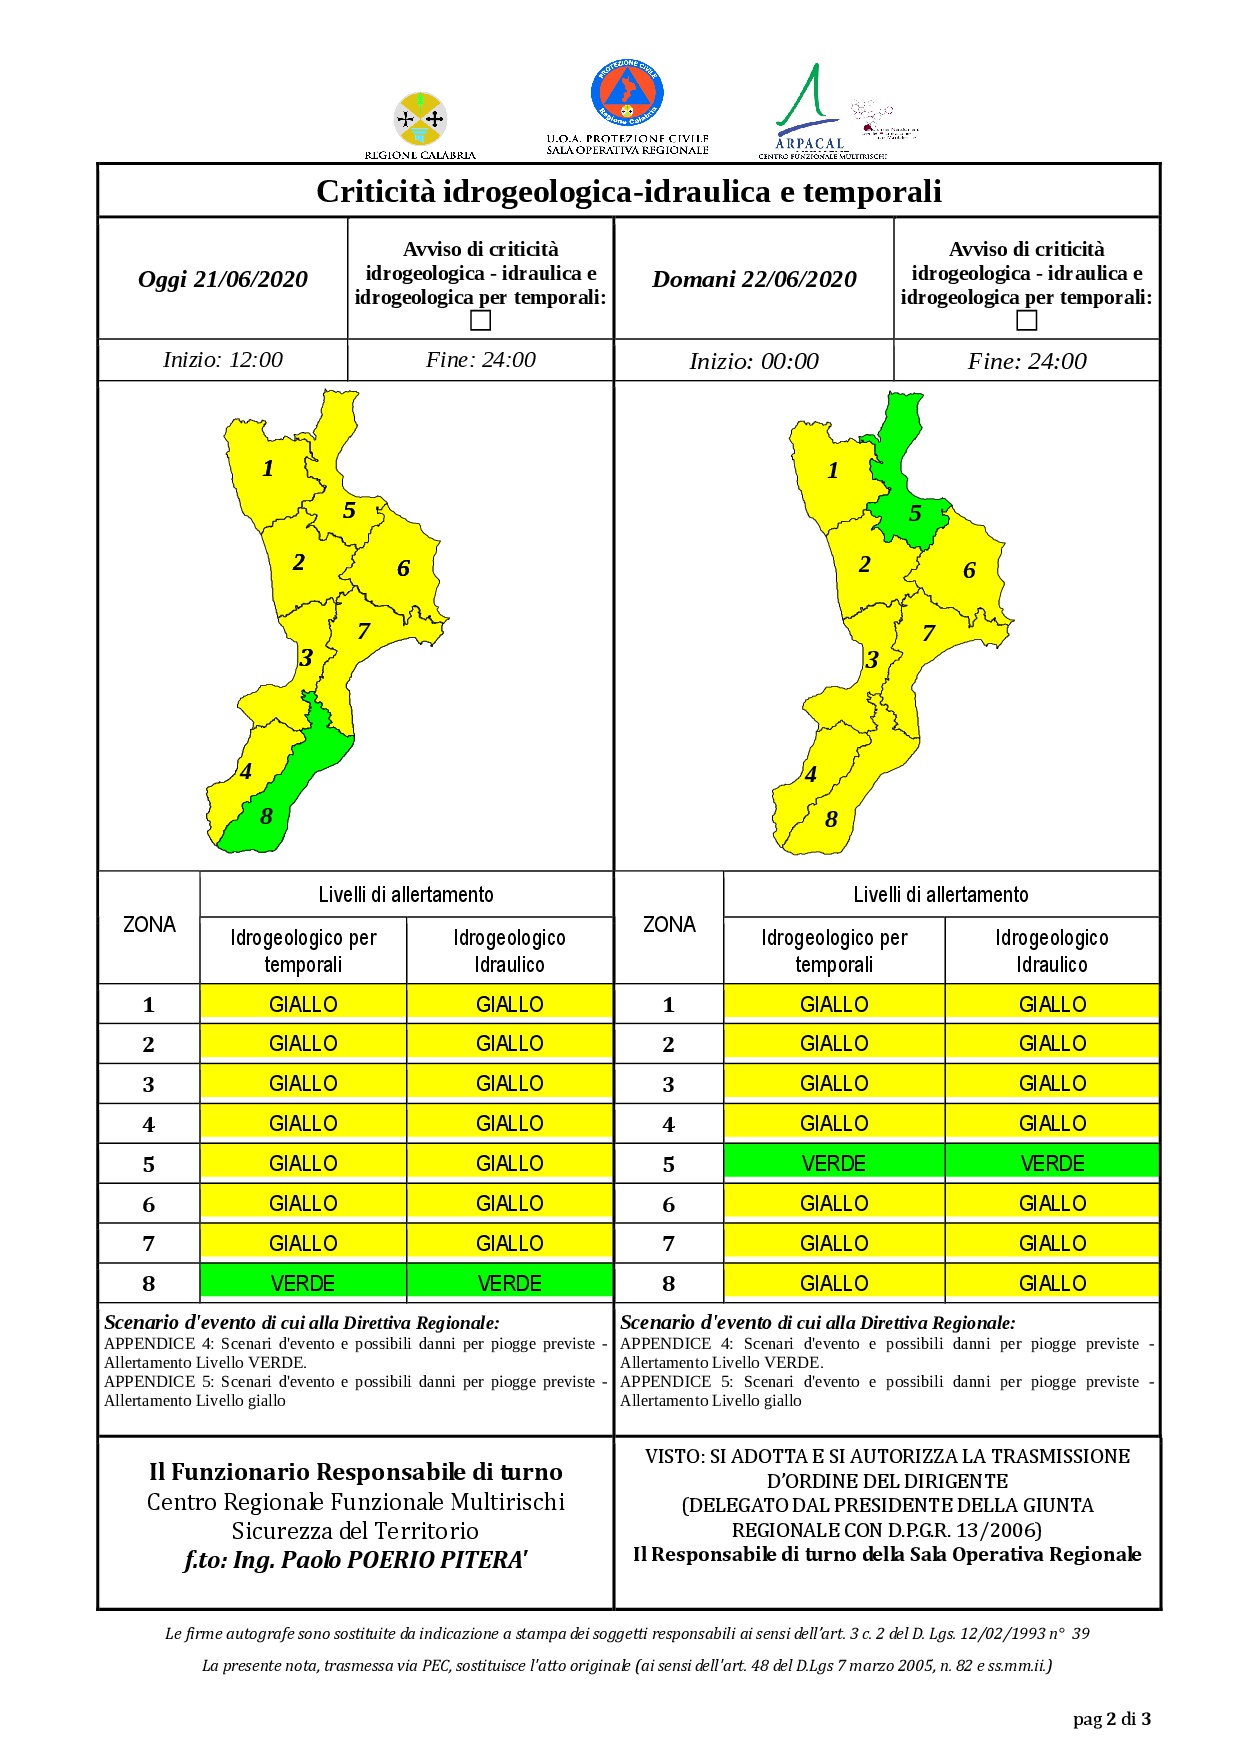 Criticità idrogeologica-idraulica e temporali in Calabria 21-06-2020